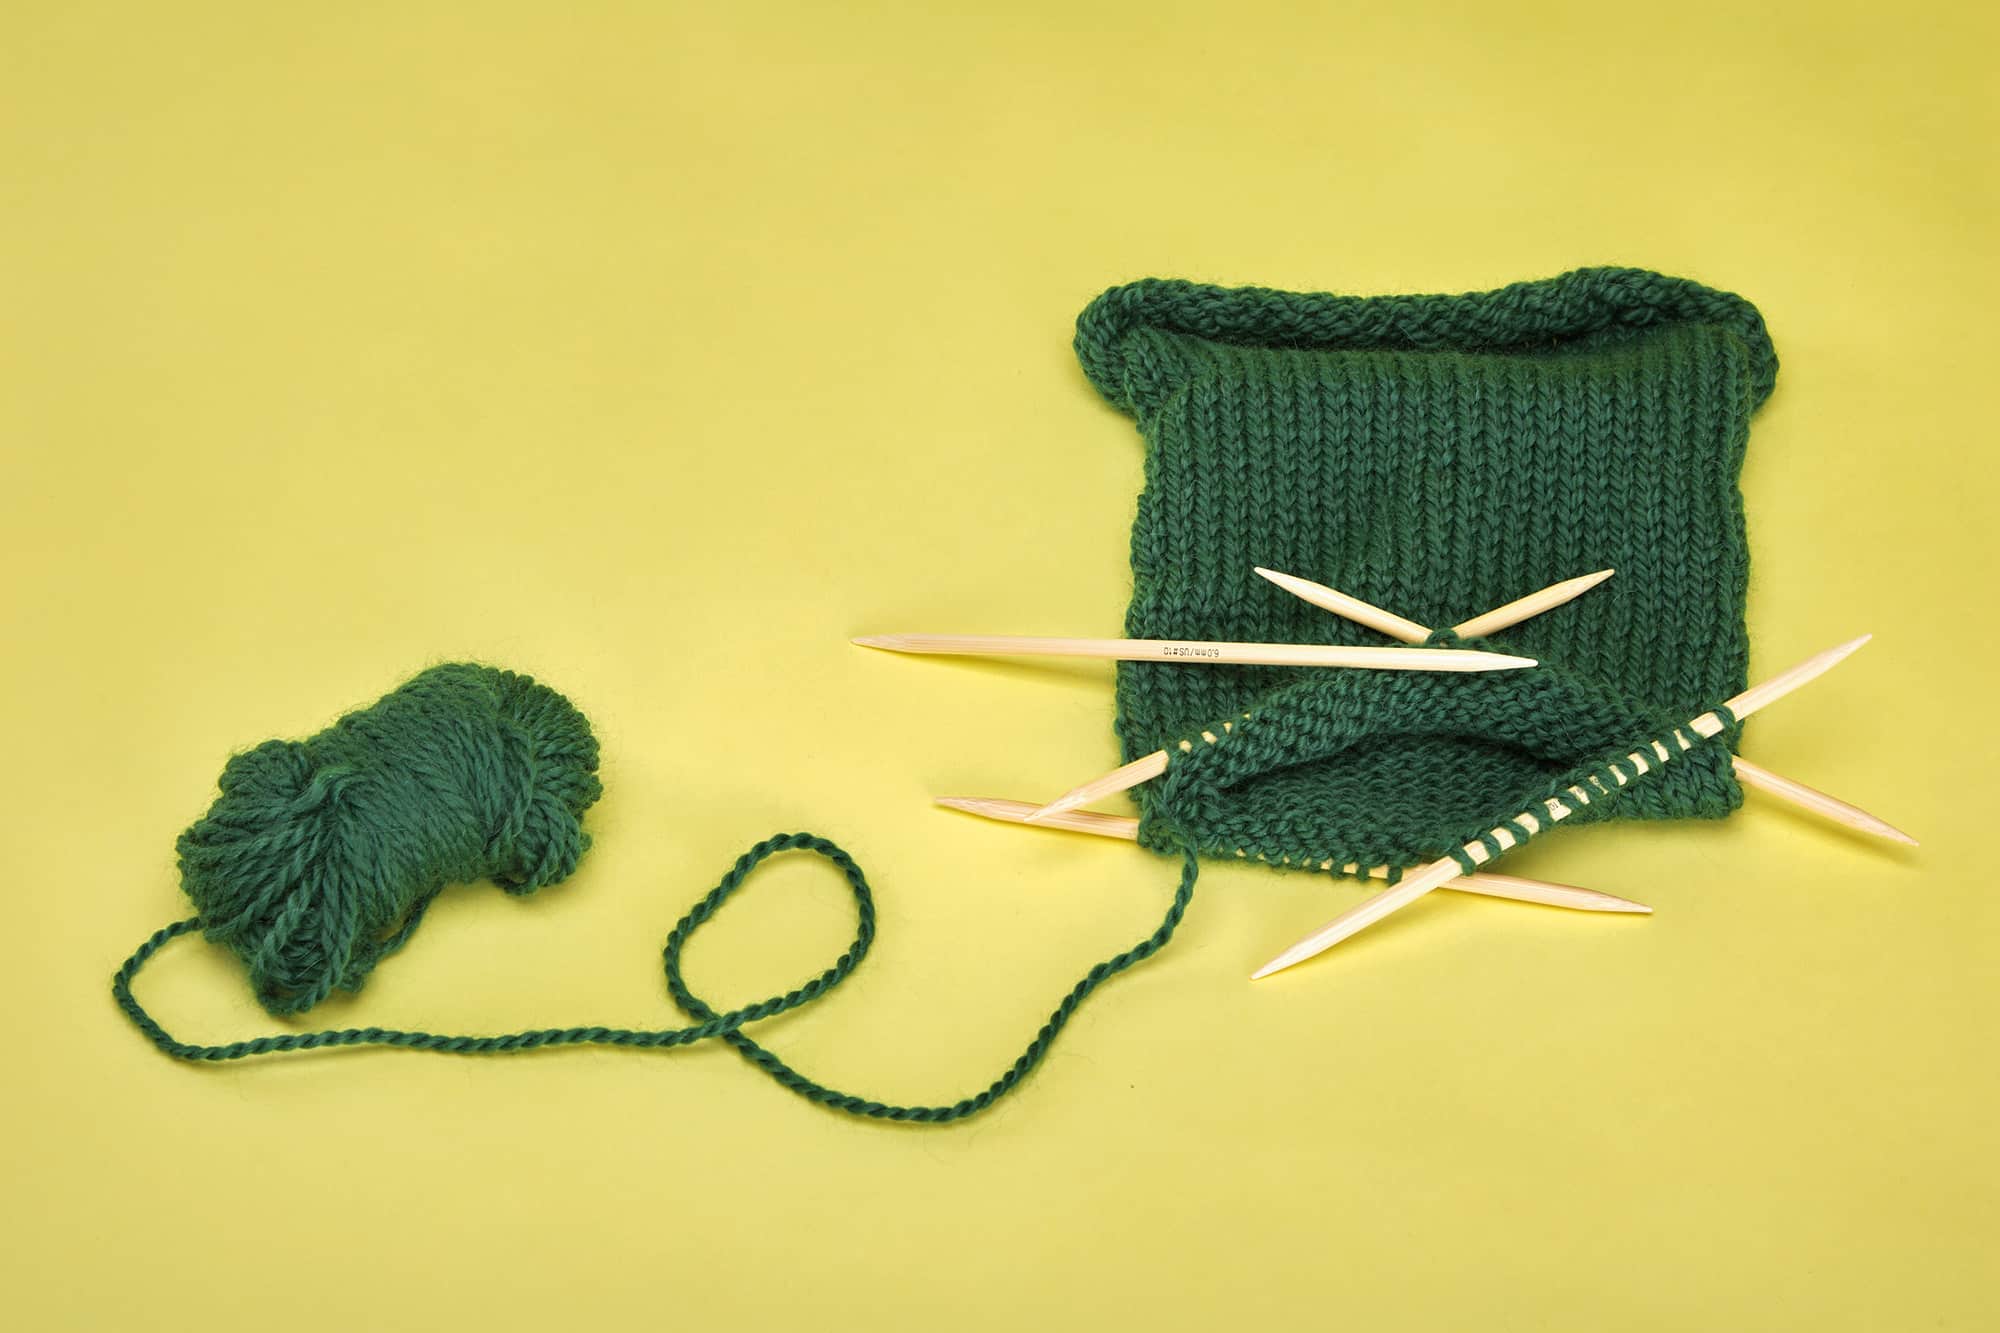 addi Aluminum Double Pointed Knitting Needles - 8 – Skein Shop